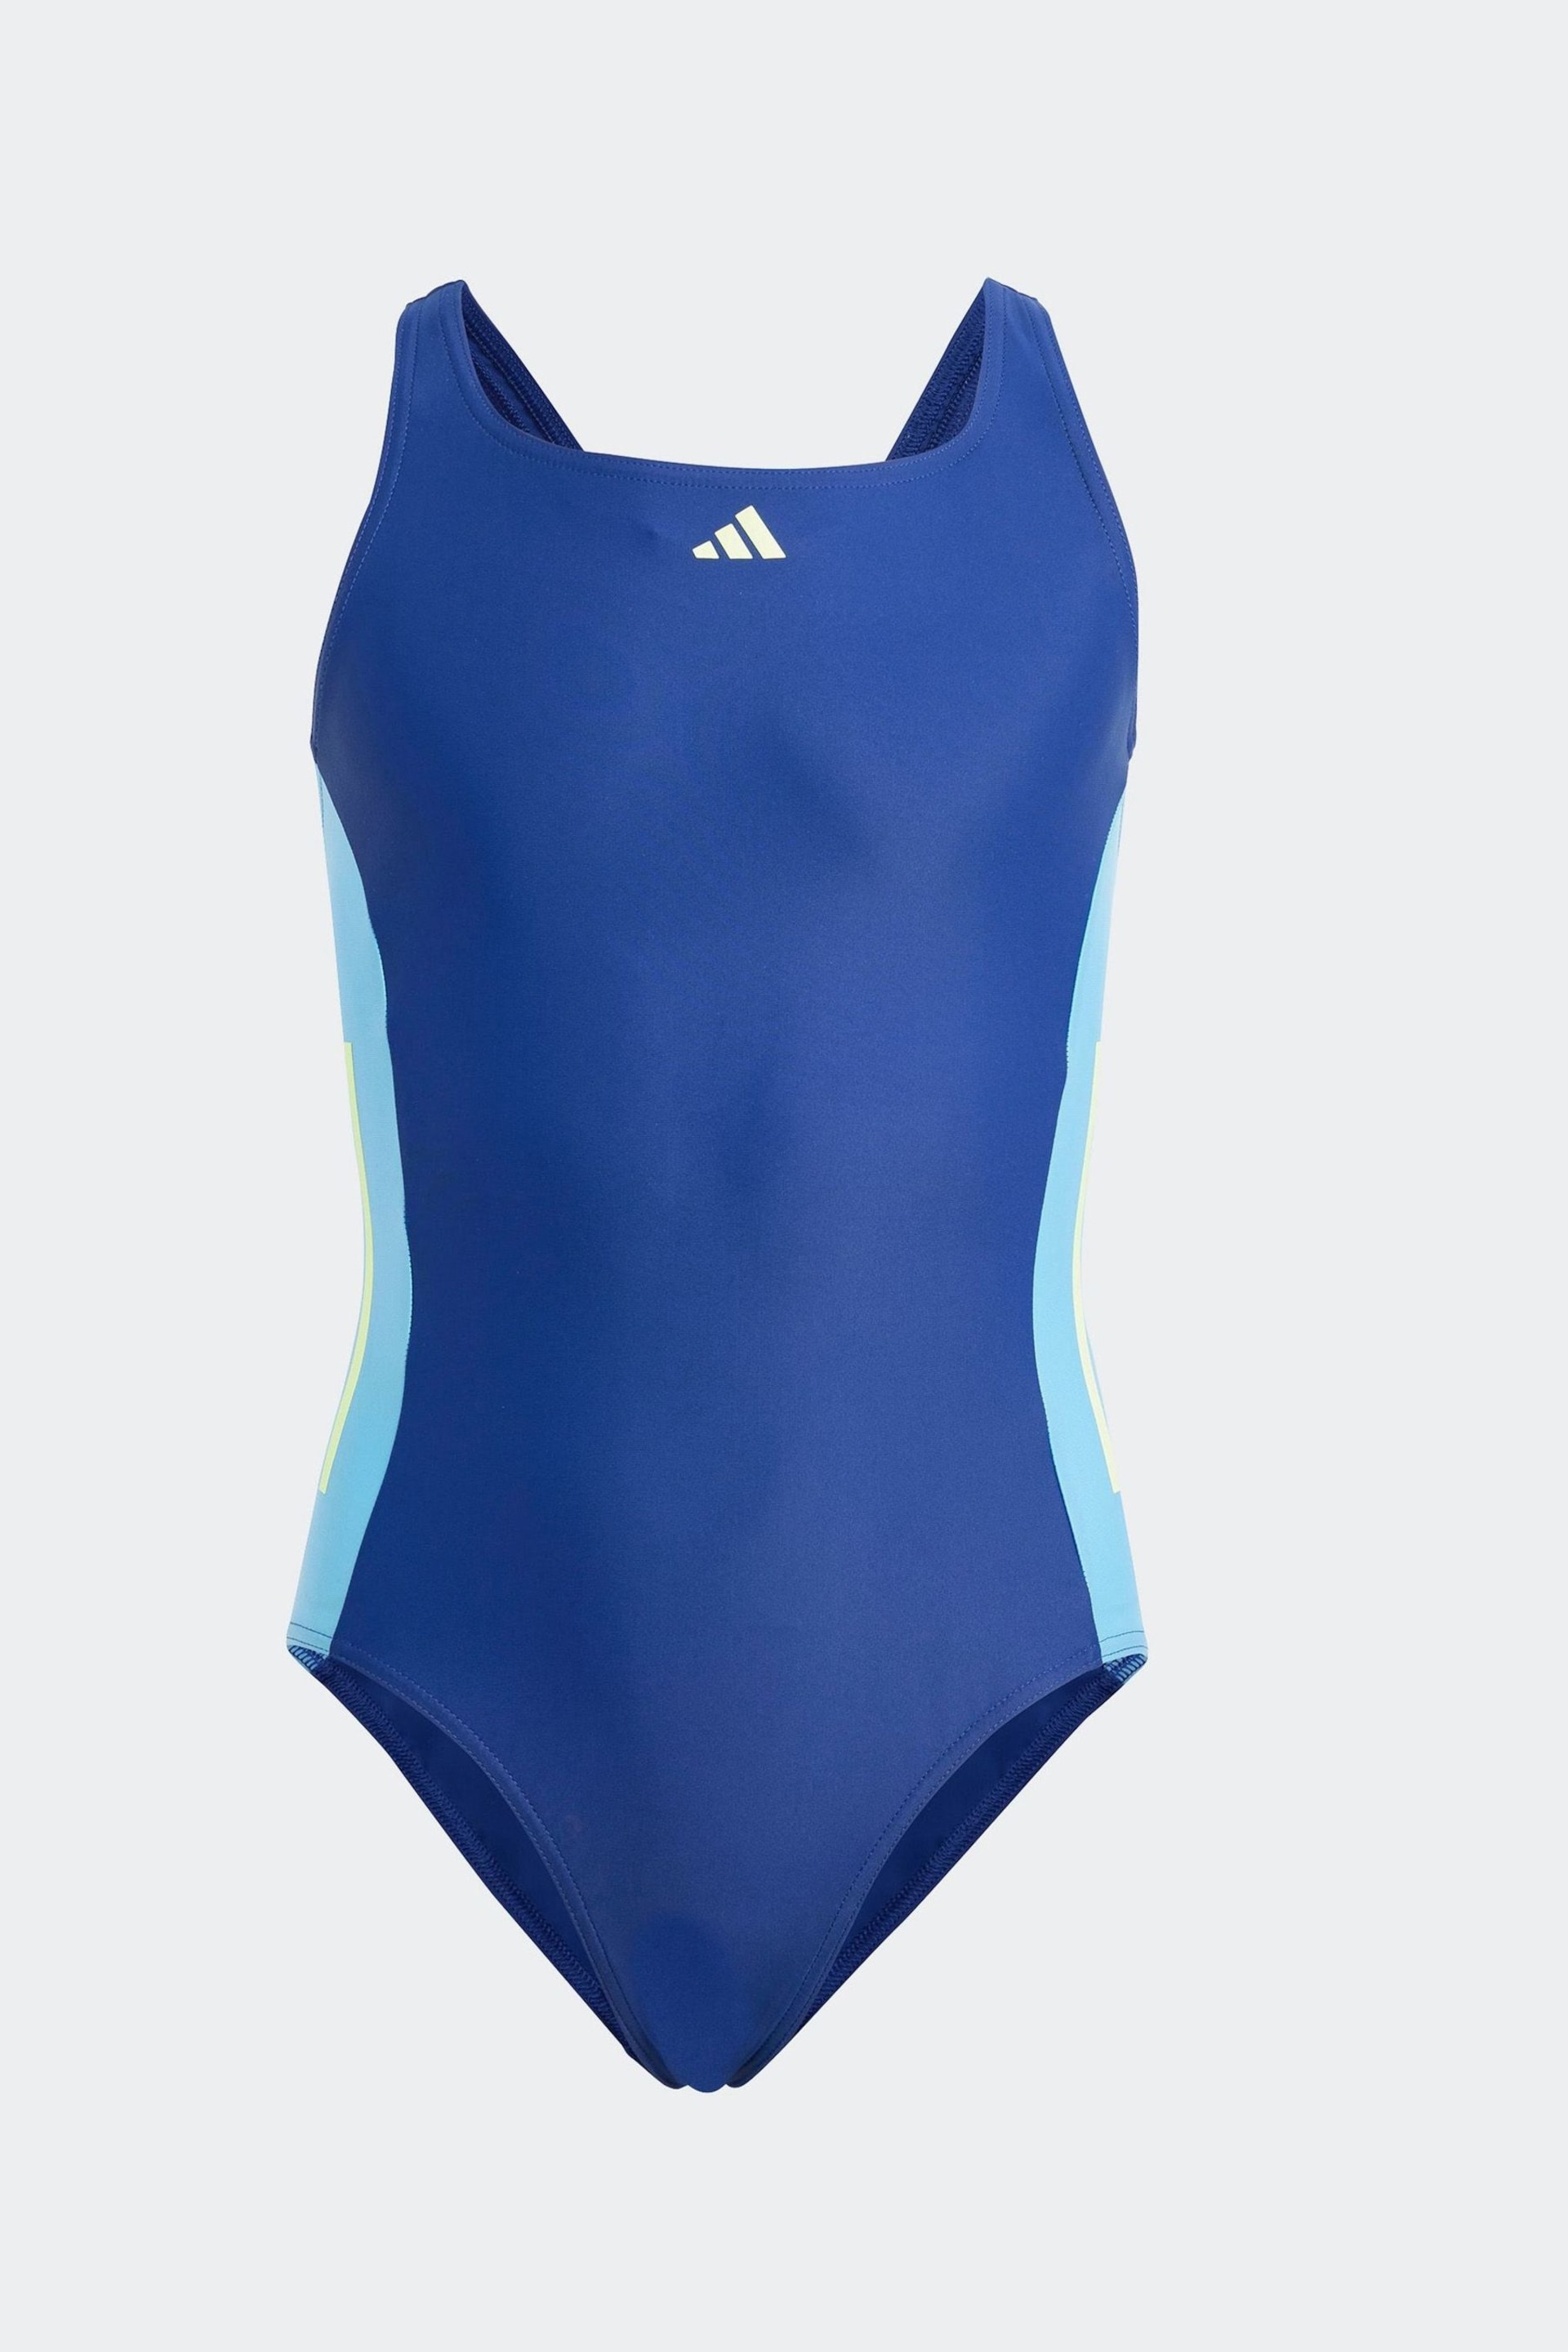 adidas Blue Cut 3 Stripes Swimsuit - Image 1 of 5